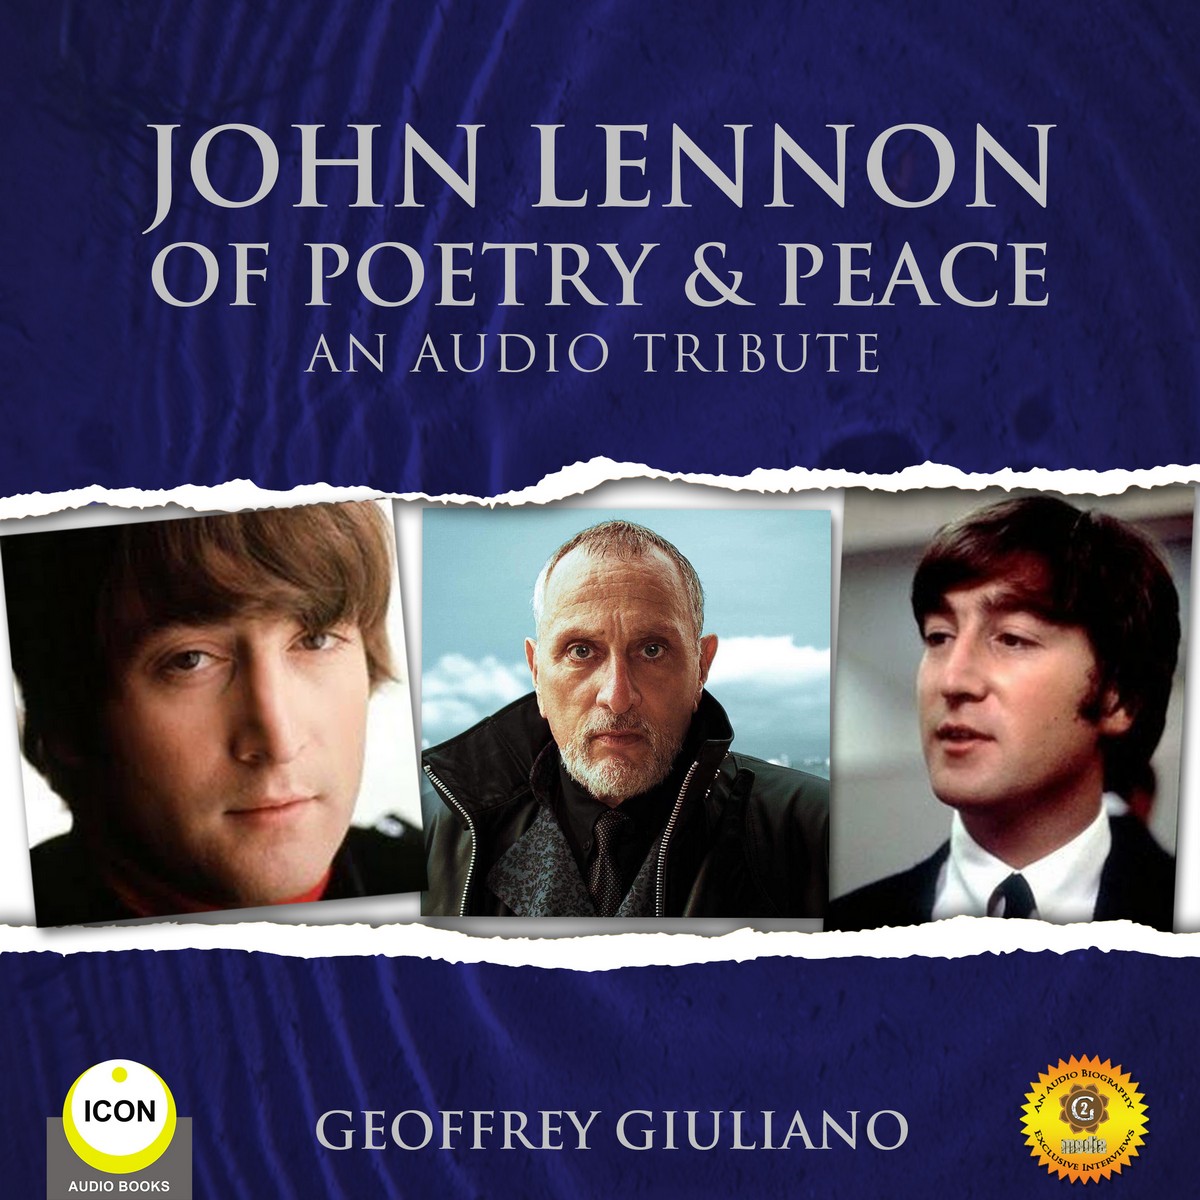 John Lennon of Poetry & Peace – An Audio Tribute